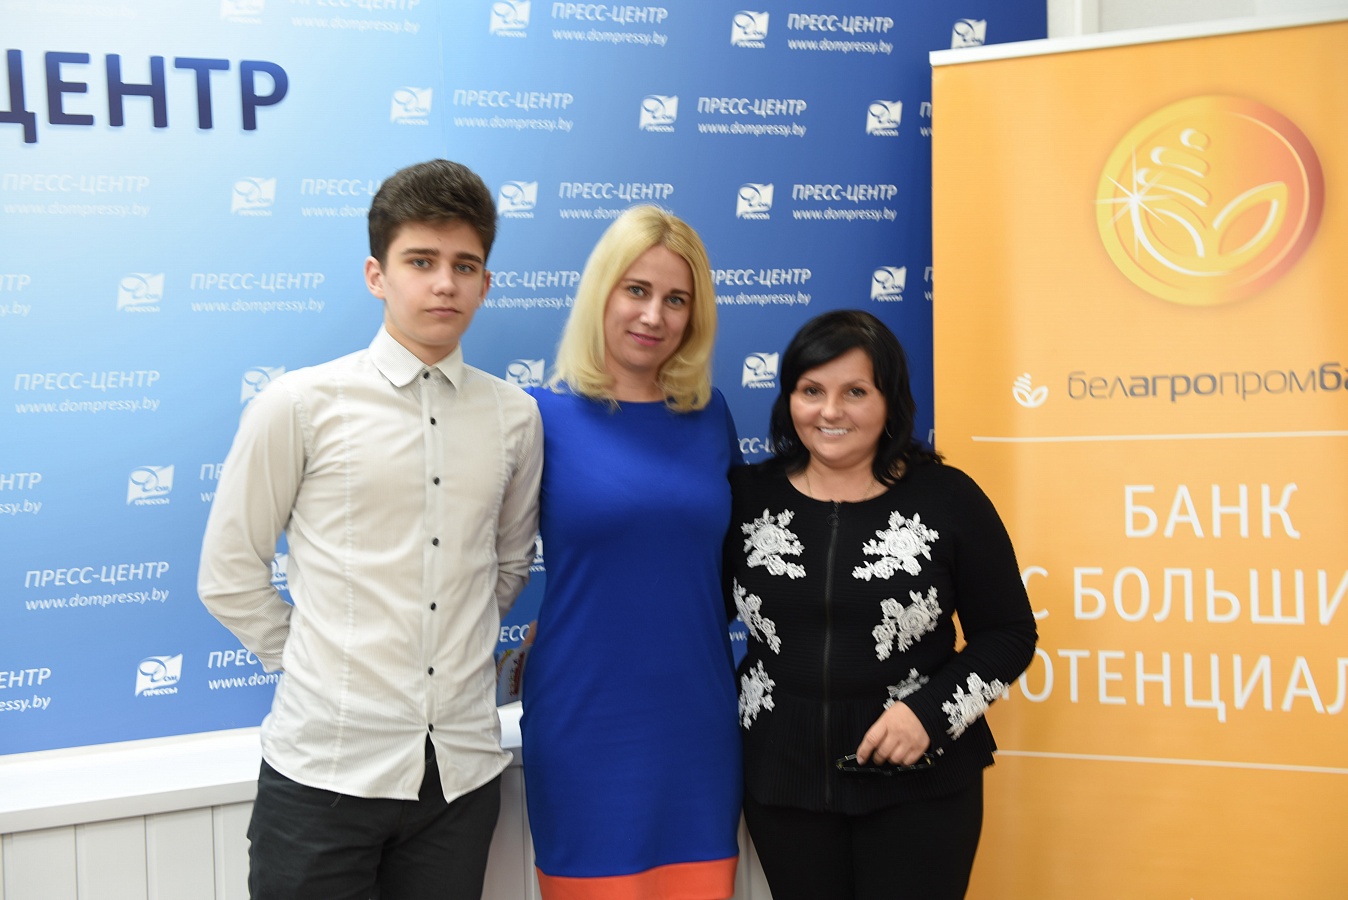 Участник Игр победителей Артем Салата, его мама Ирина Саламатина и директор фонда «Прикосновение к жизни» Лариса Ивашкевич.